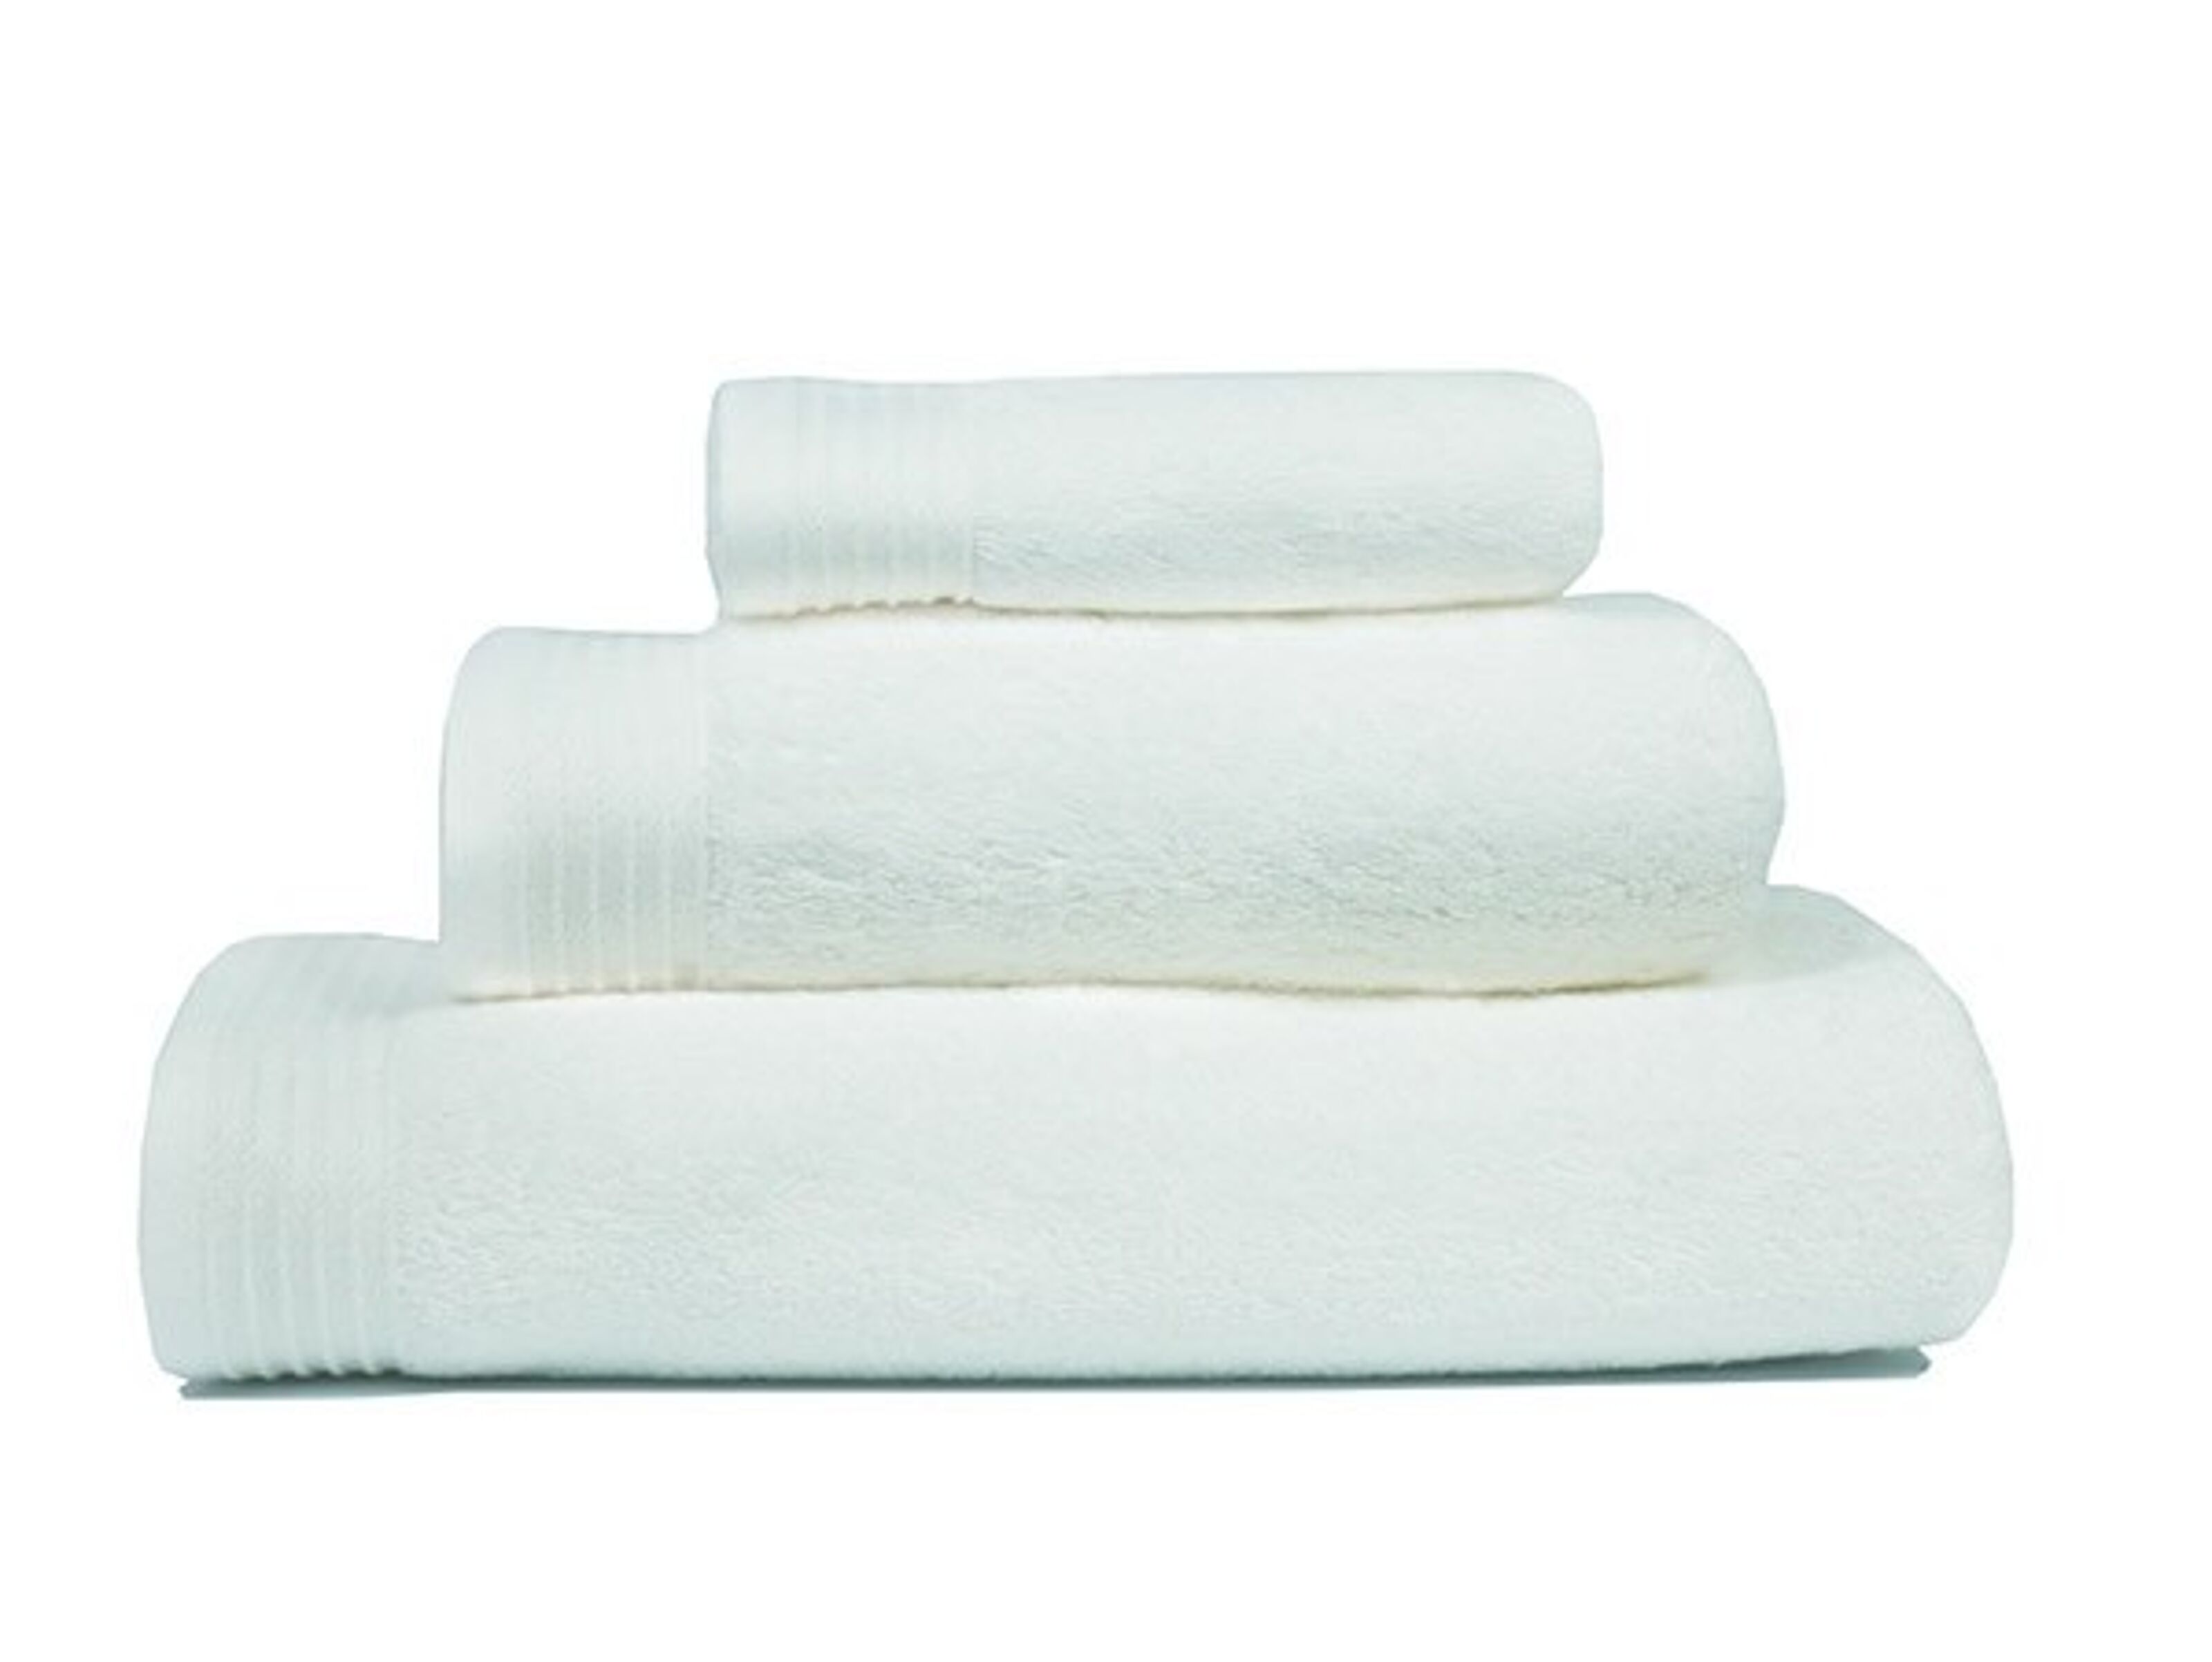 001 Premium wholesale - Bath towel white Buy